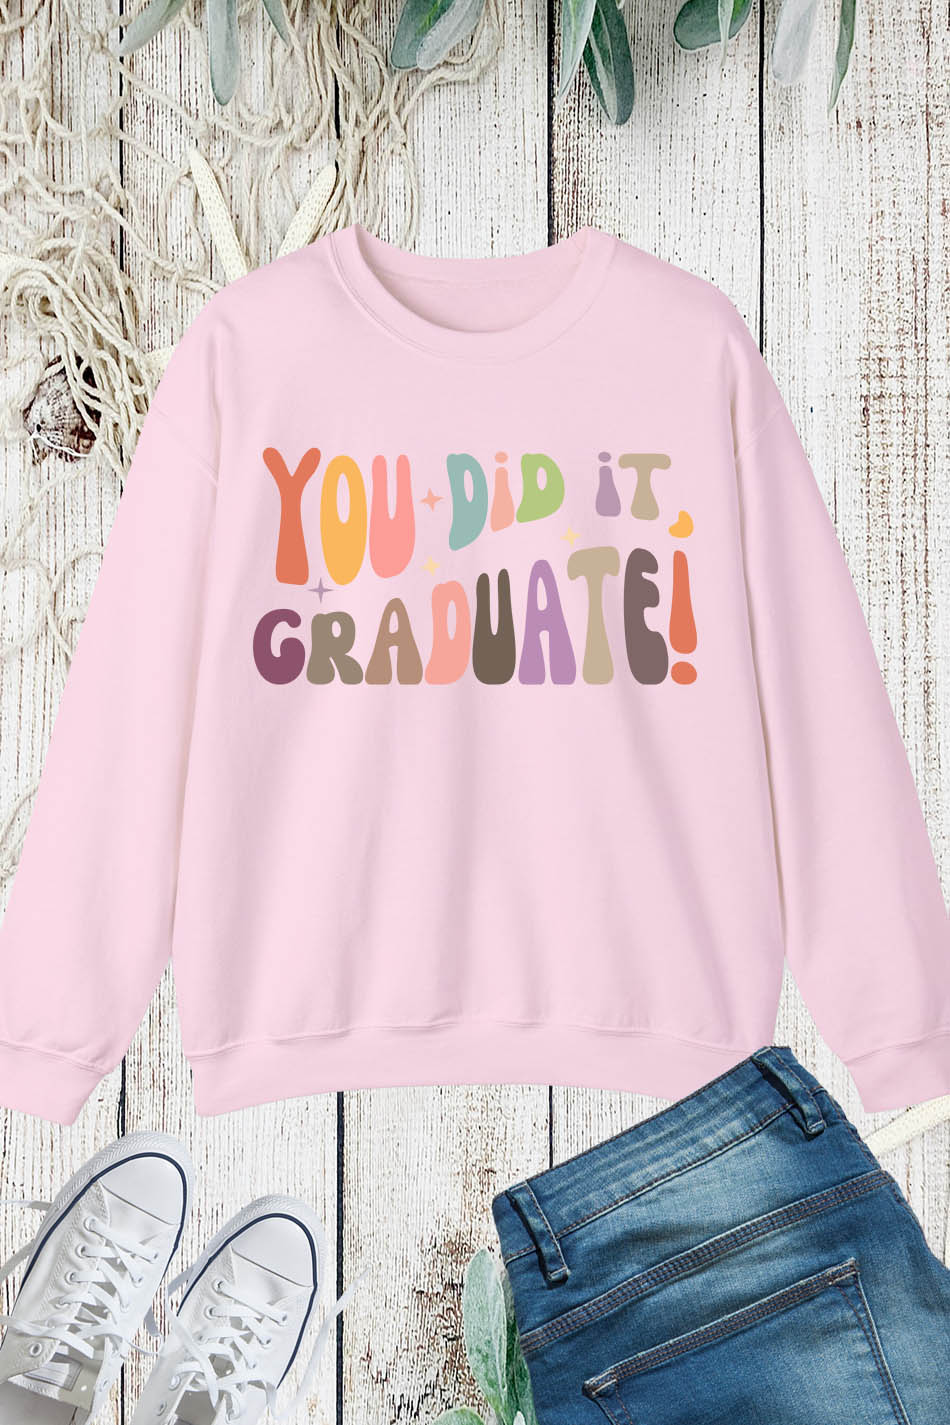 You Did it Graduate Sweatshirts